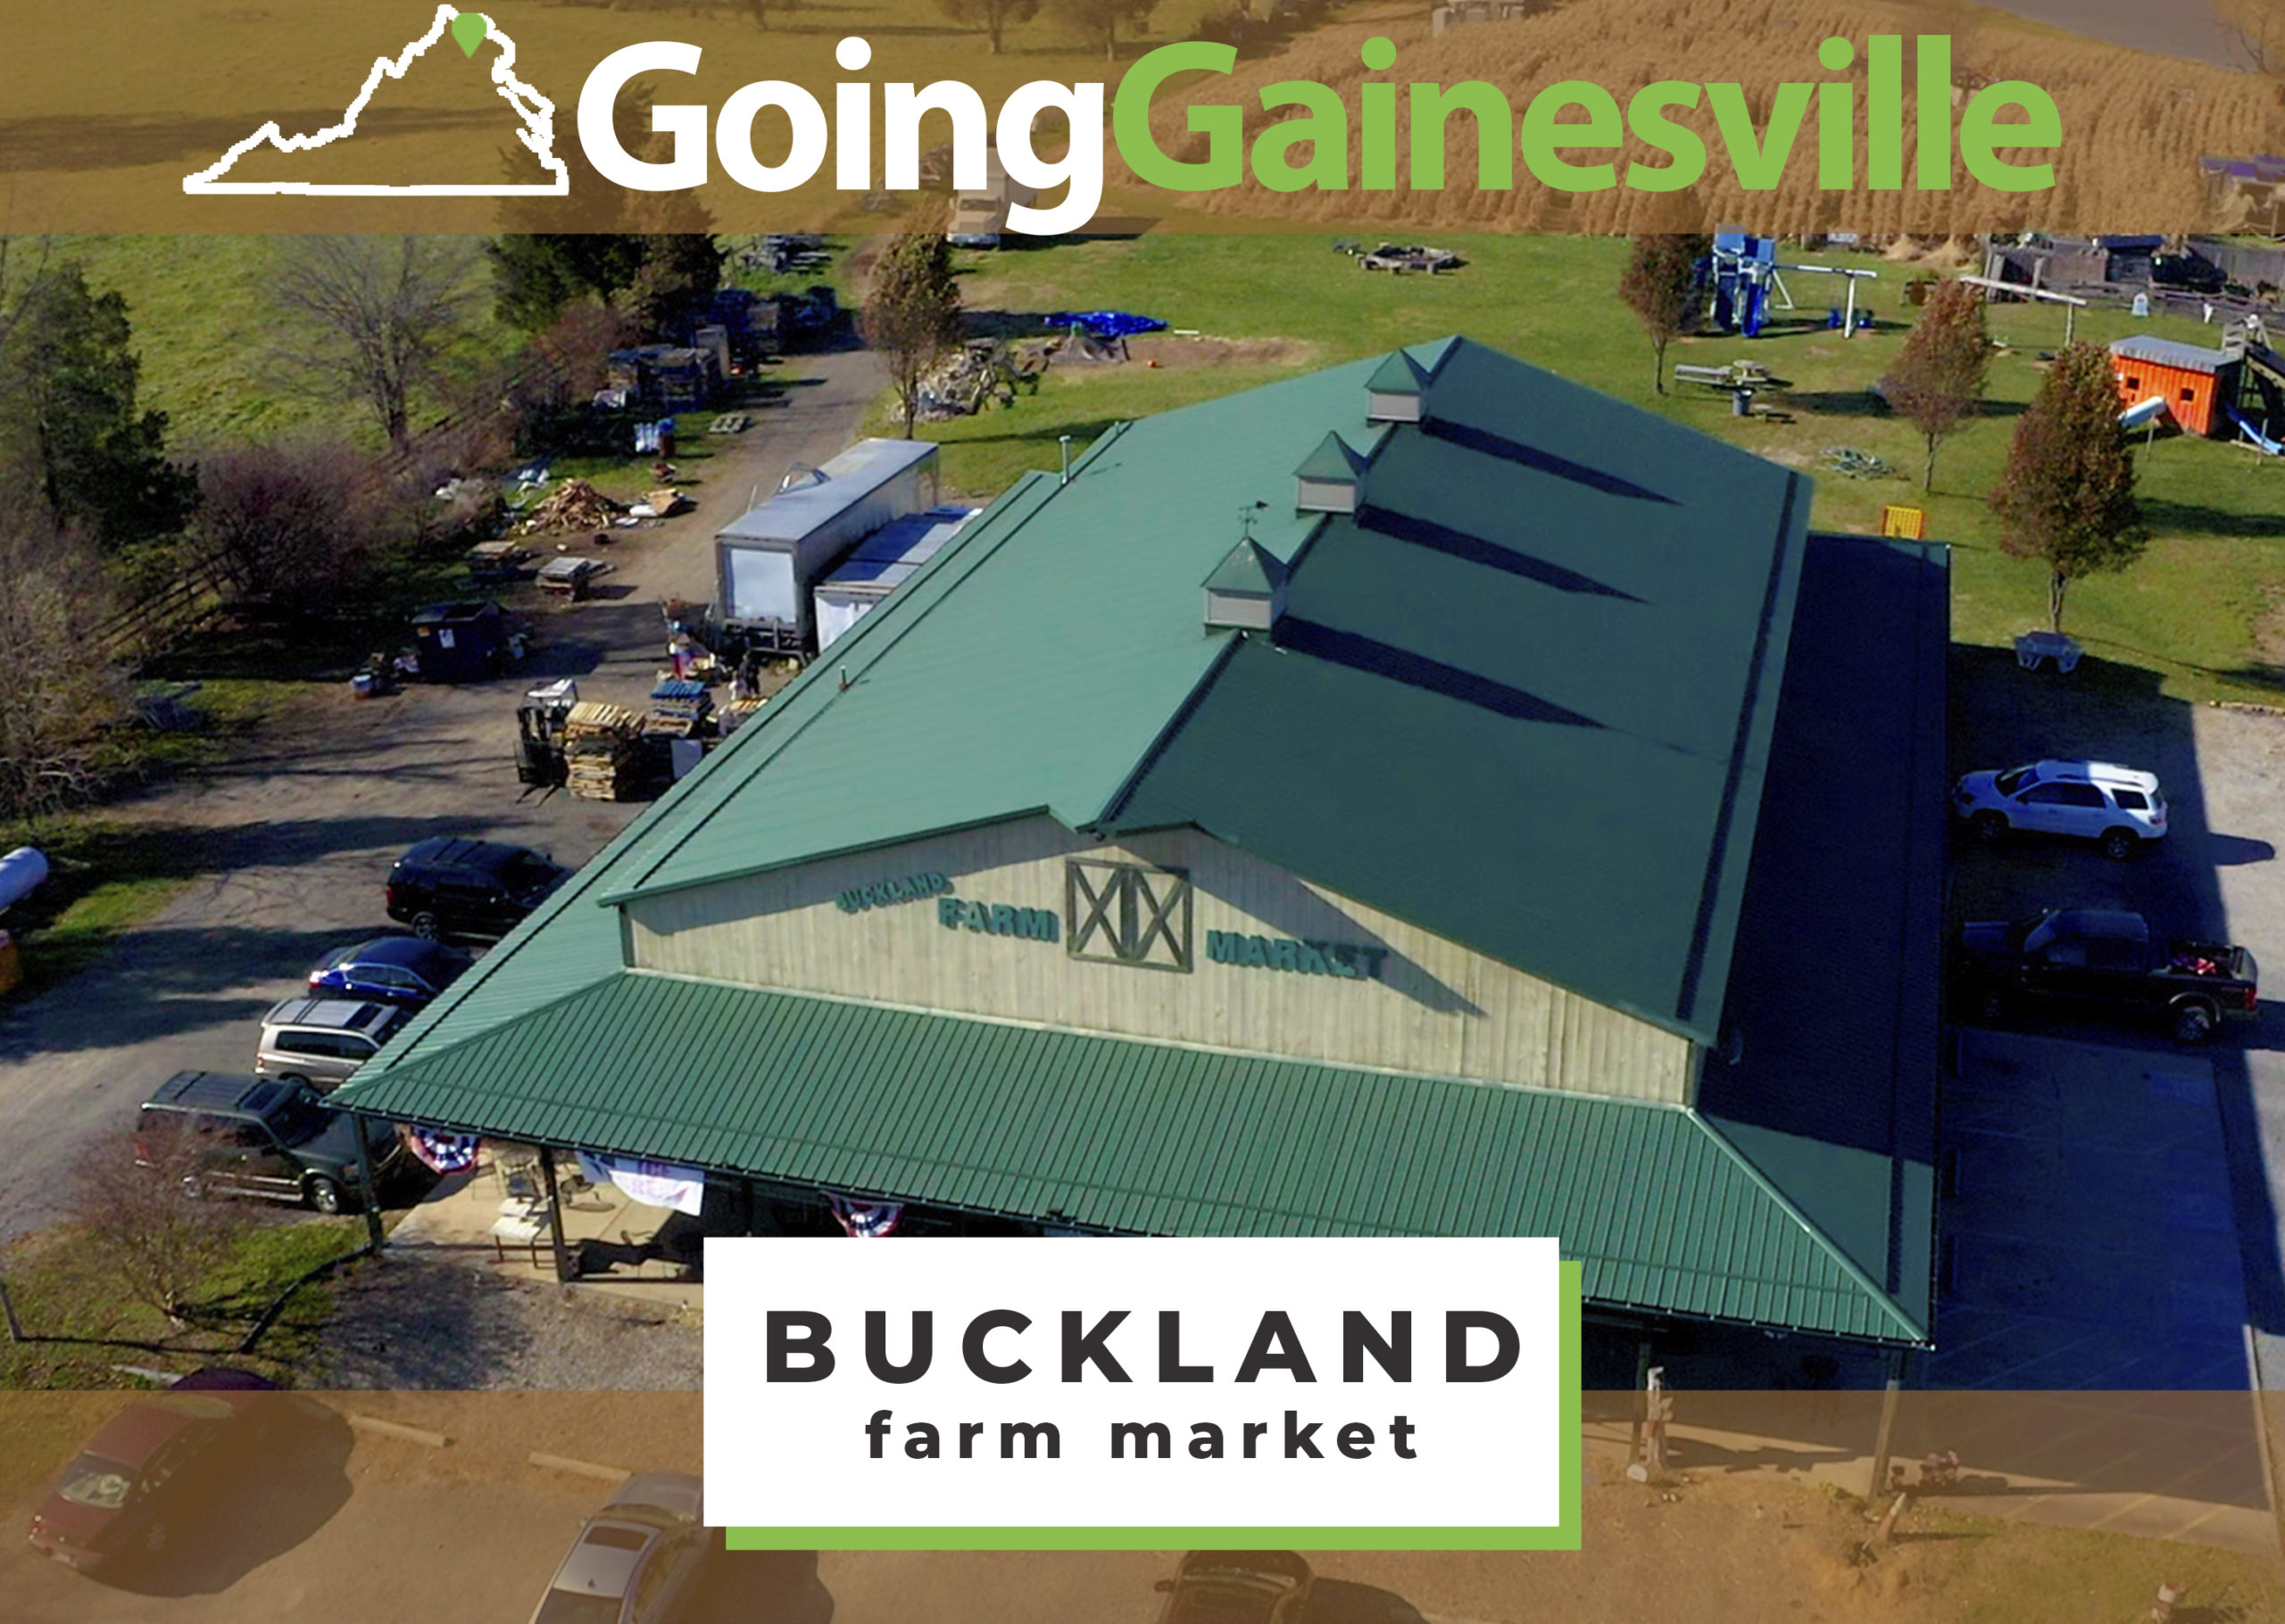 Buckland Farm Market!